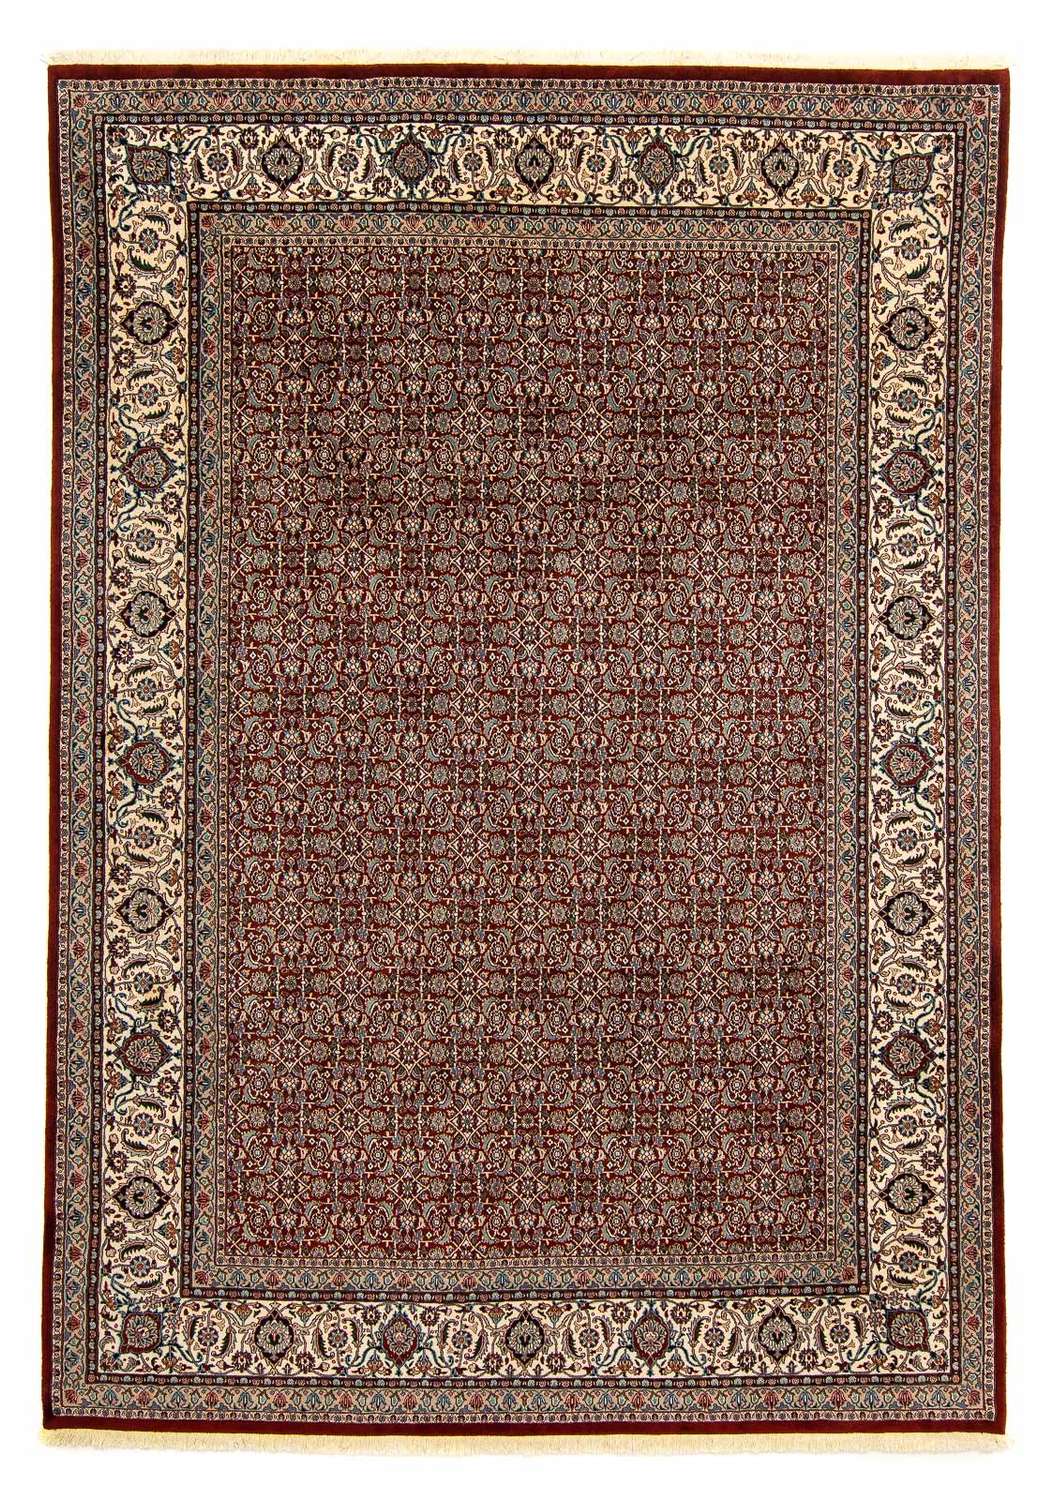 Alfombra persa - Clásica - 342 x 244 cm - rojo oscuro